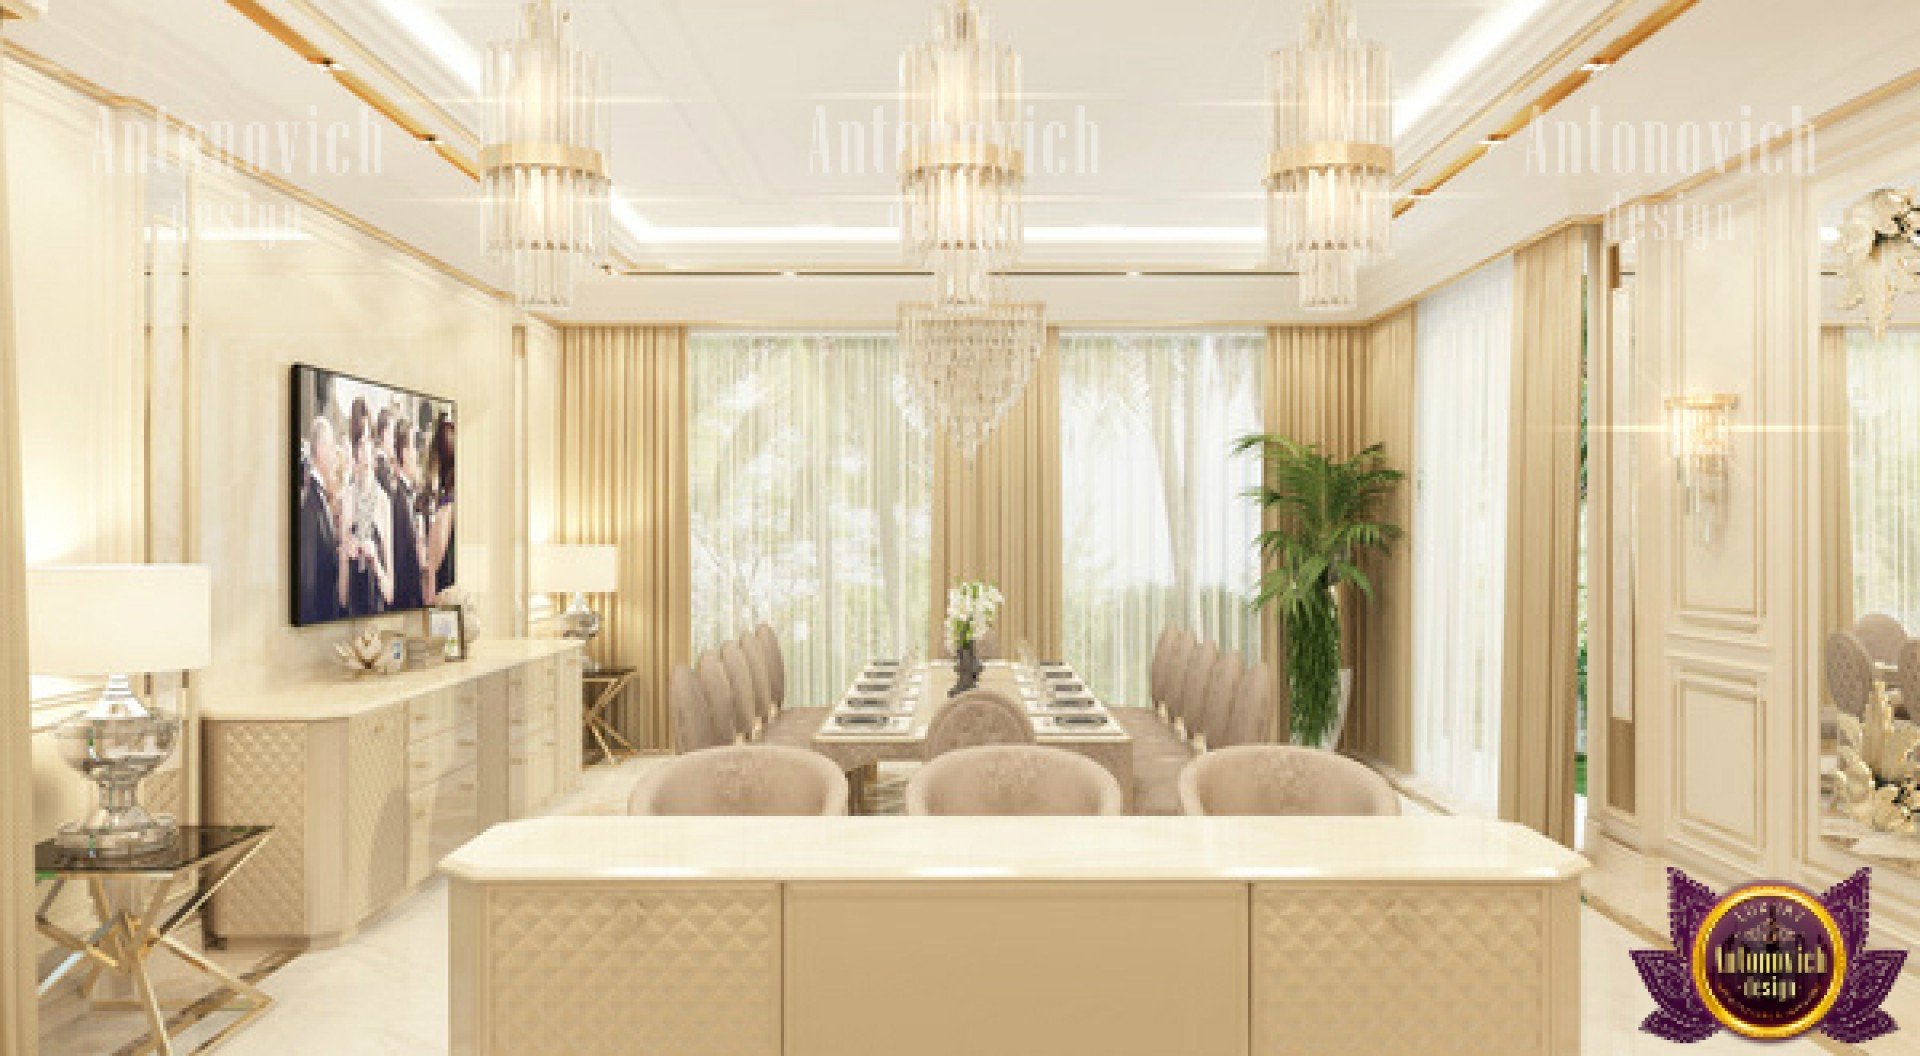 Elegant lobby design featuring modern art and plush seating